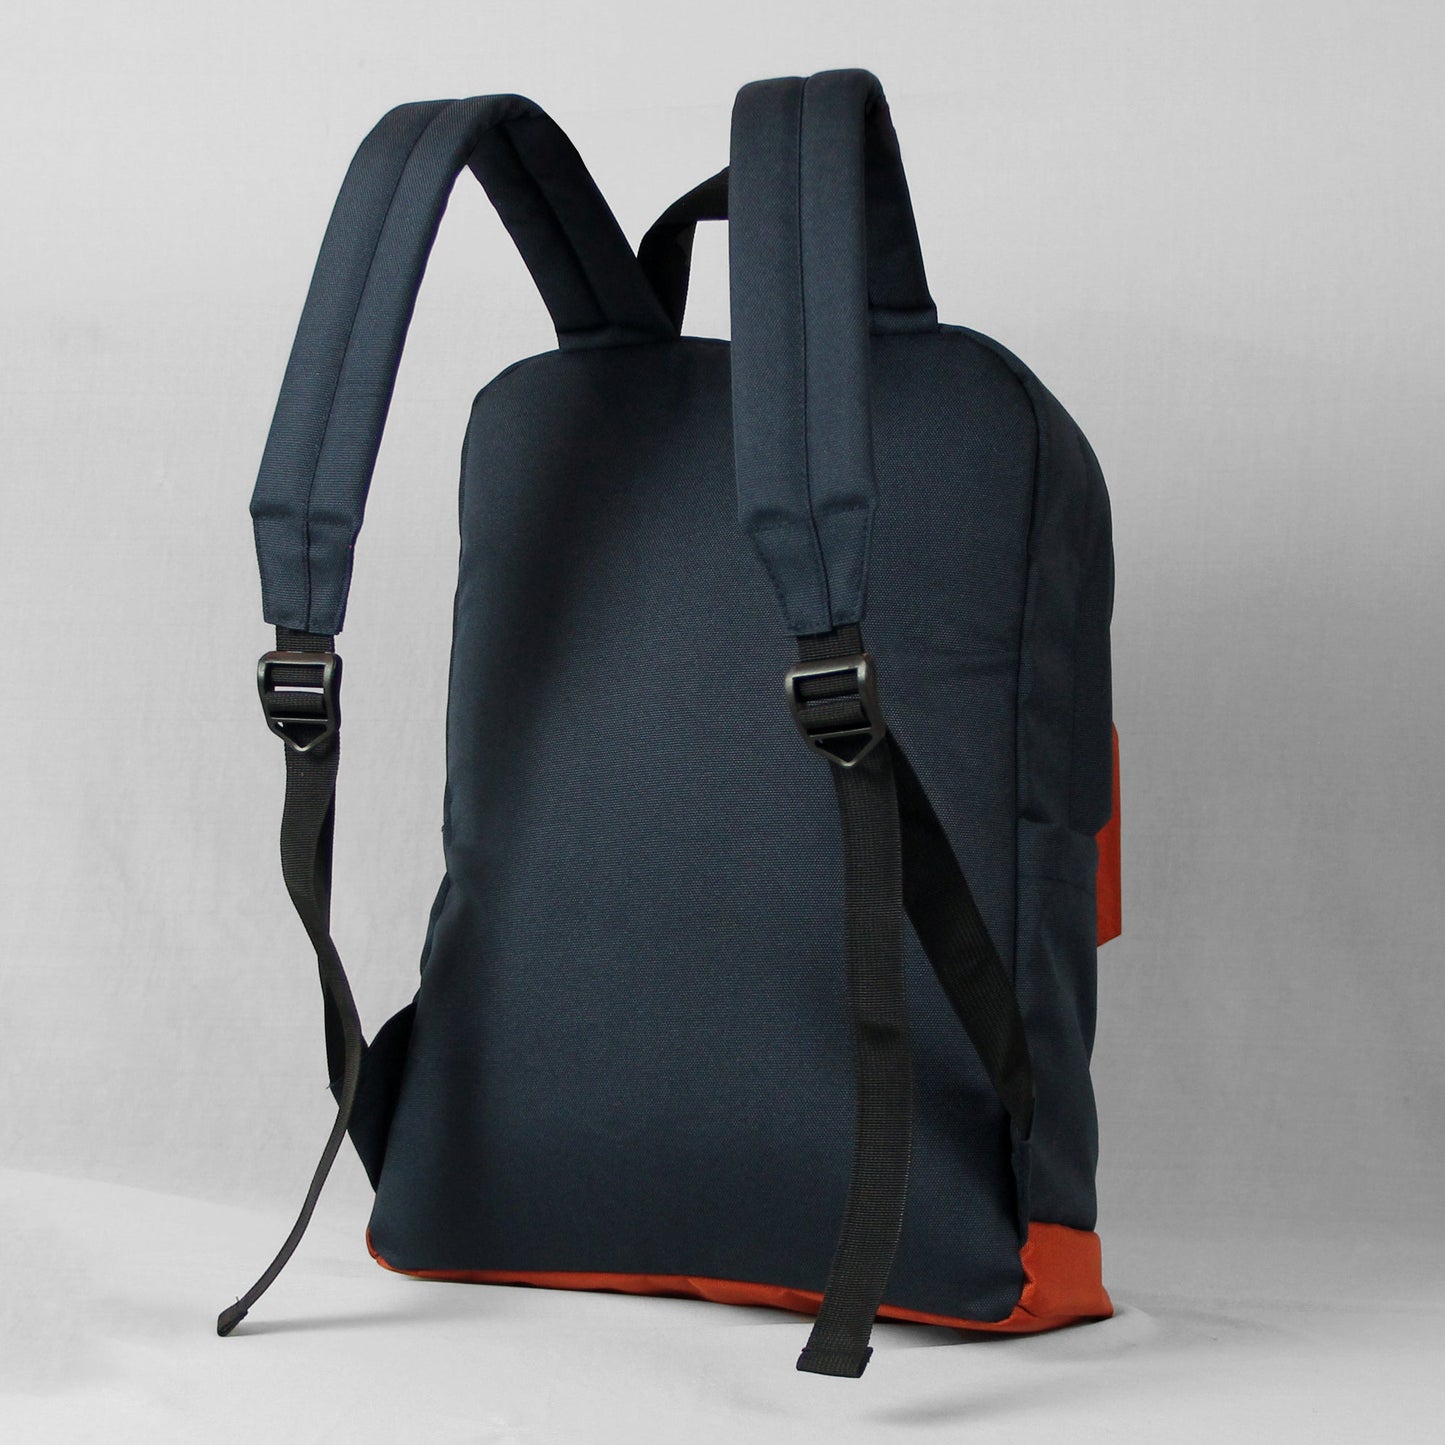 Buy Daypack Online Orangeade Unisex Backpack with Padded Shoulder Straps- Madbrag